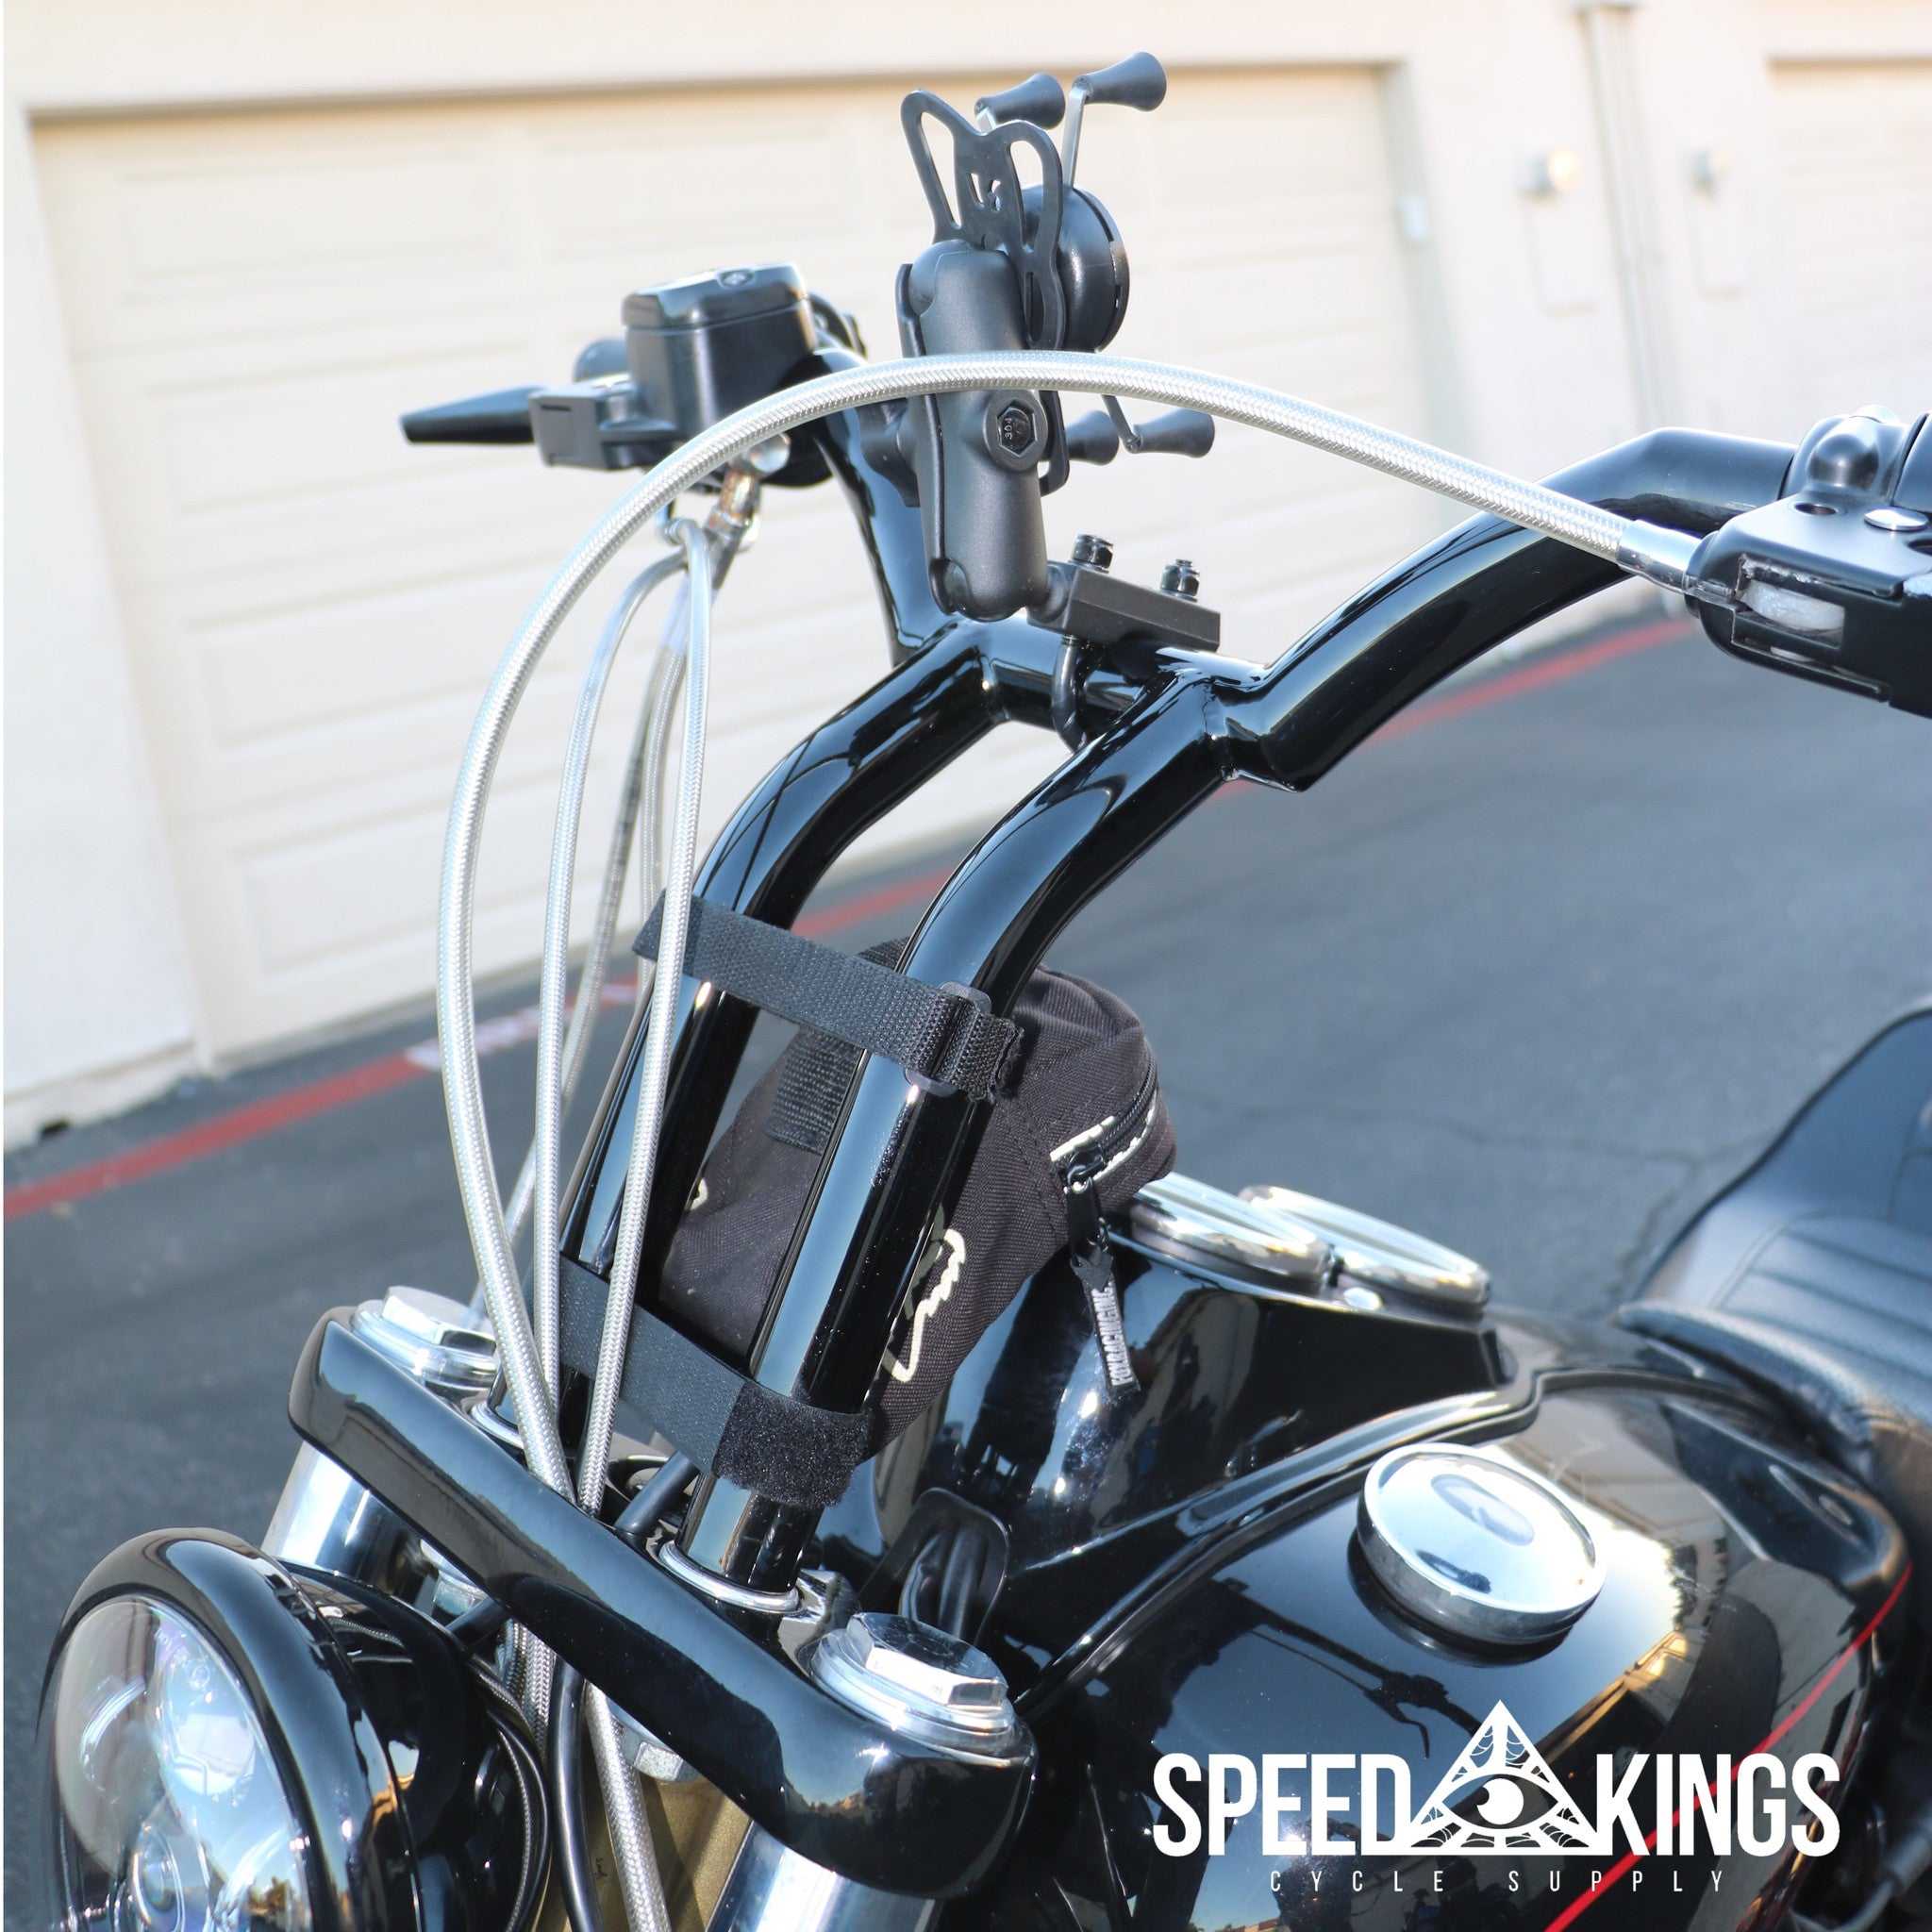 Speed-Kings-Zyklus, Speed-Kings Pullback Bar